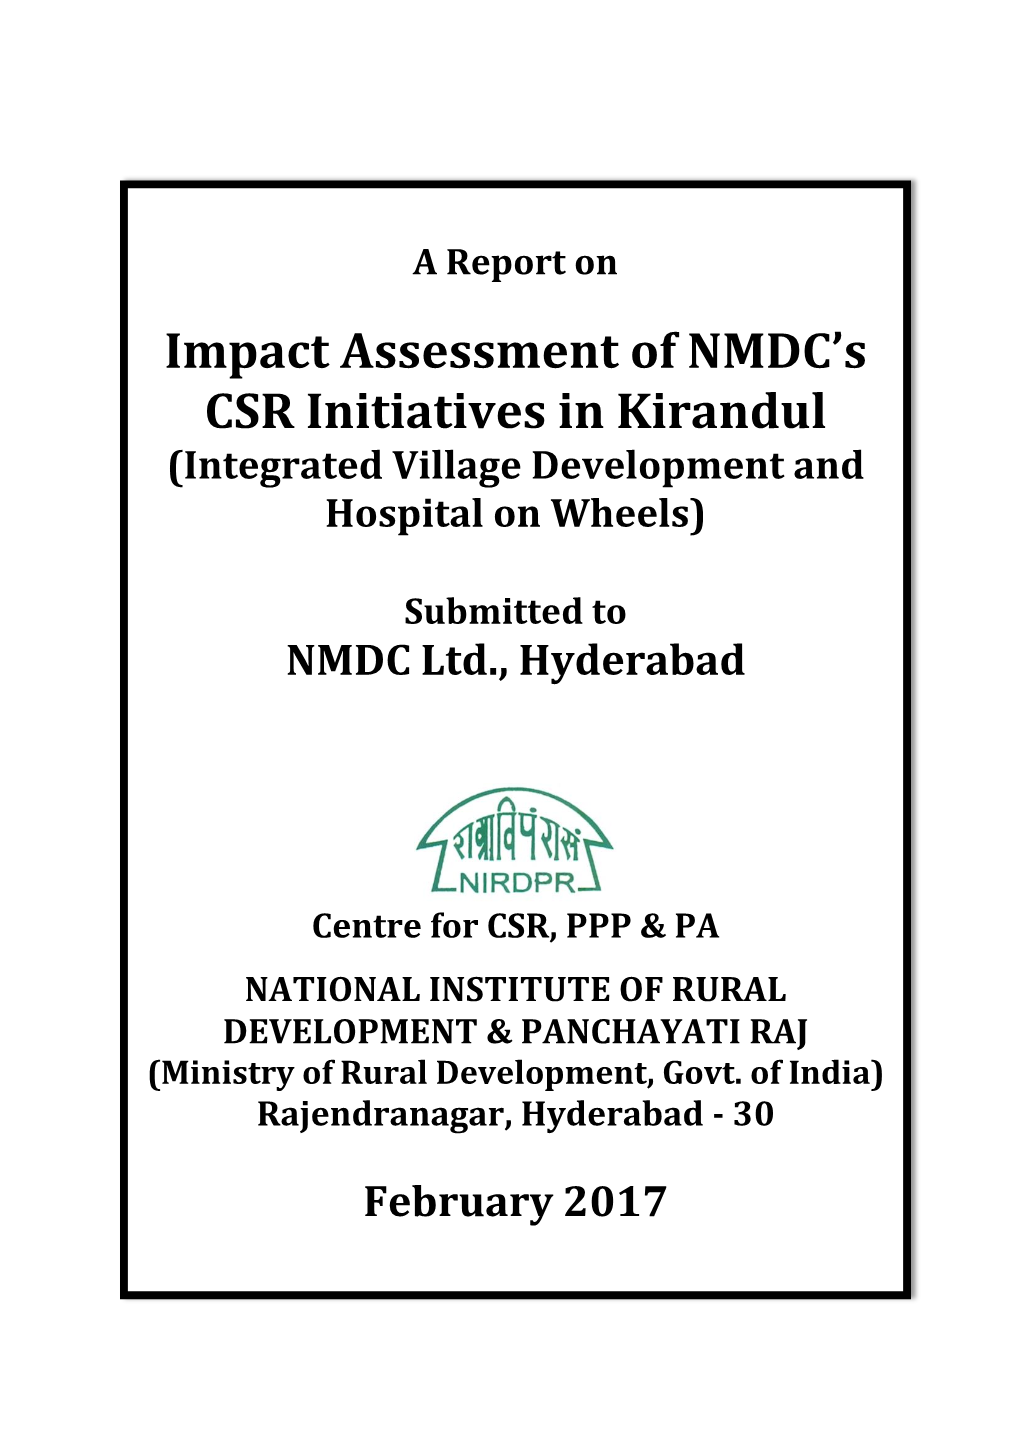 Impact Assessment of NMDC's CSR Initiatives in Kirandul